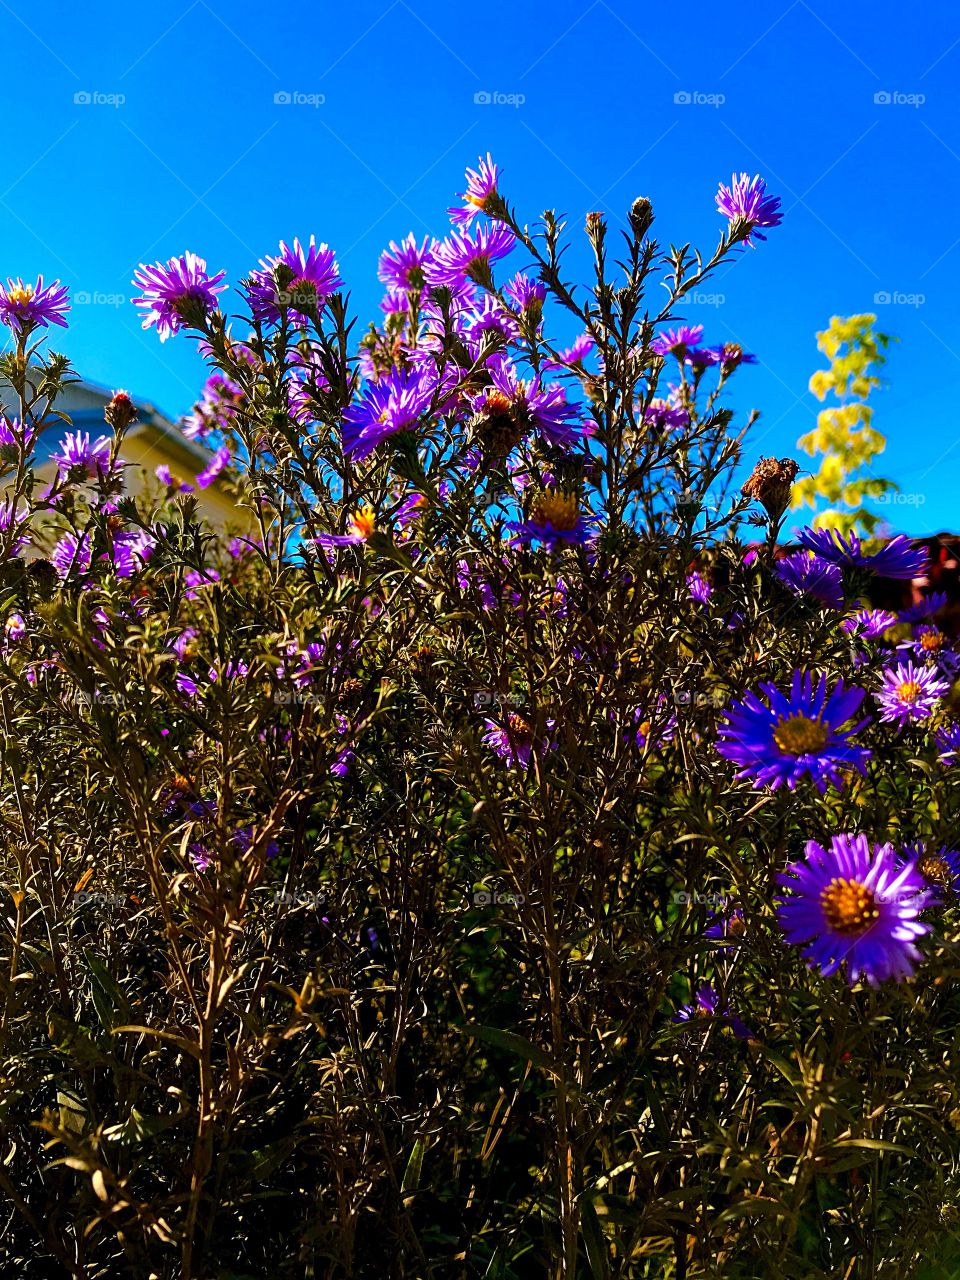 autumn flowers against a blue skyq